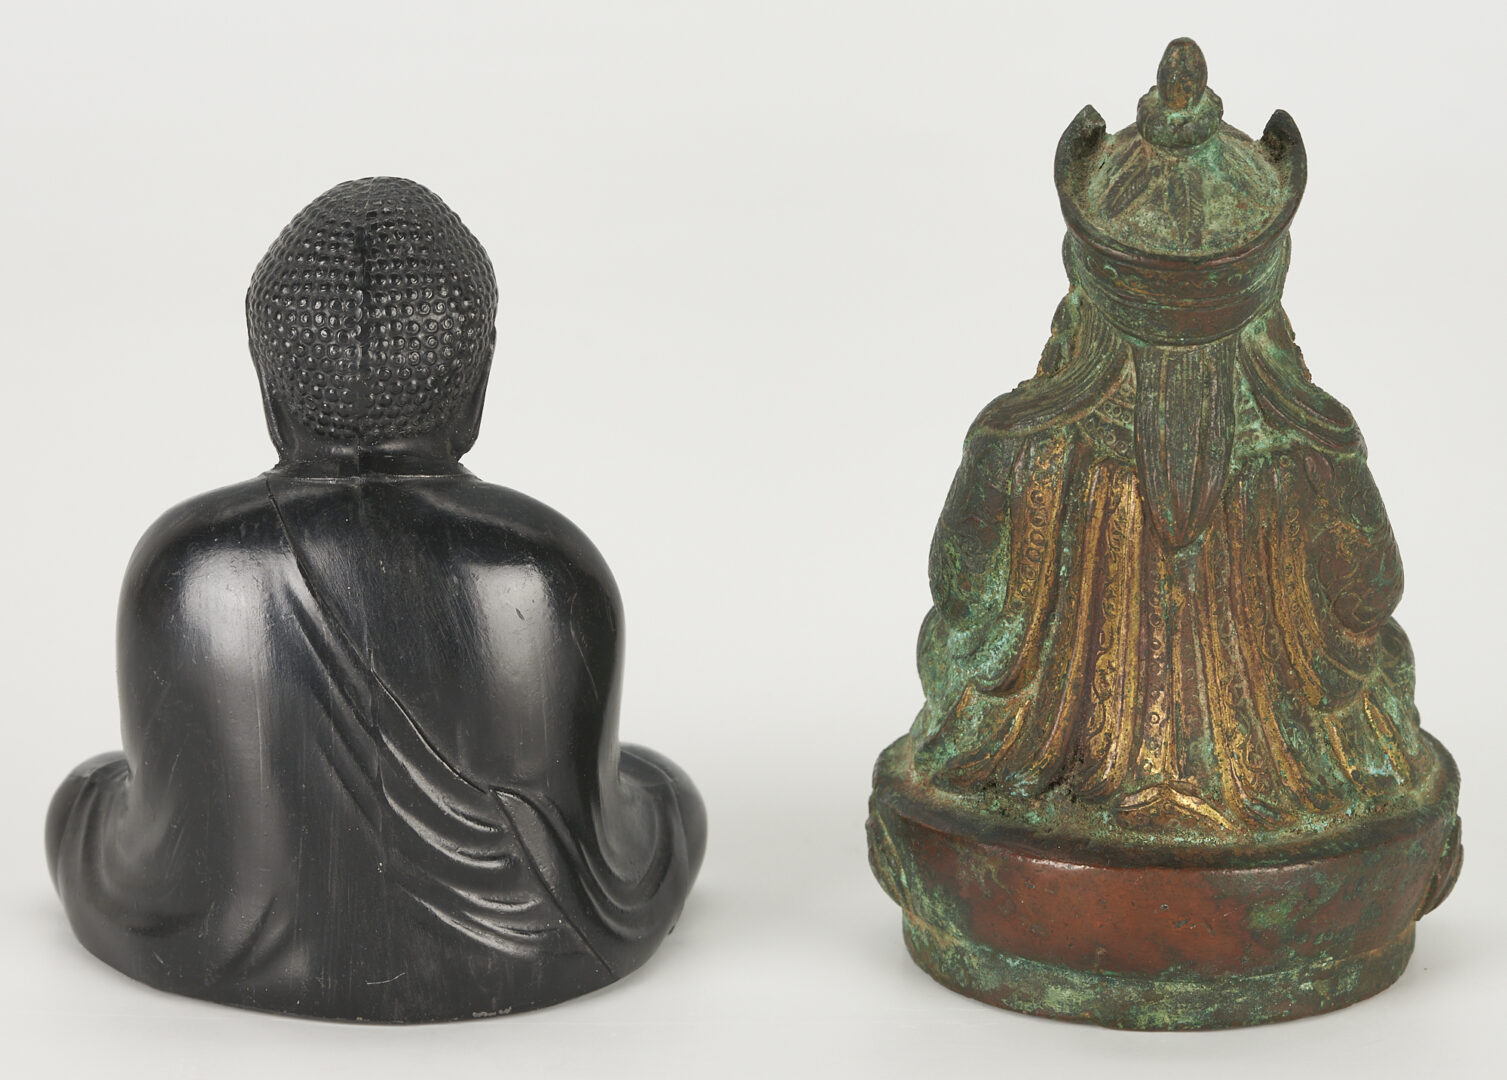 Lot 189: 5 Asian Decorative Items, incl. Vases, Buddhas & Jade